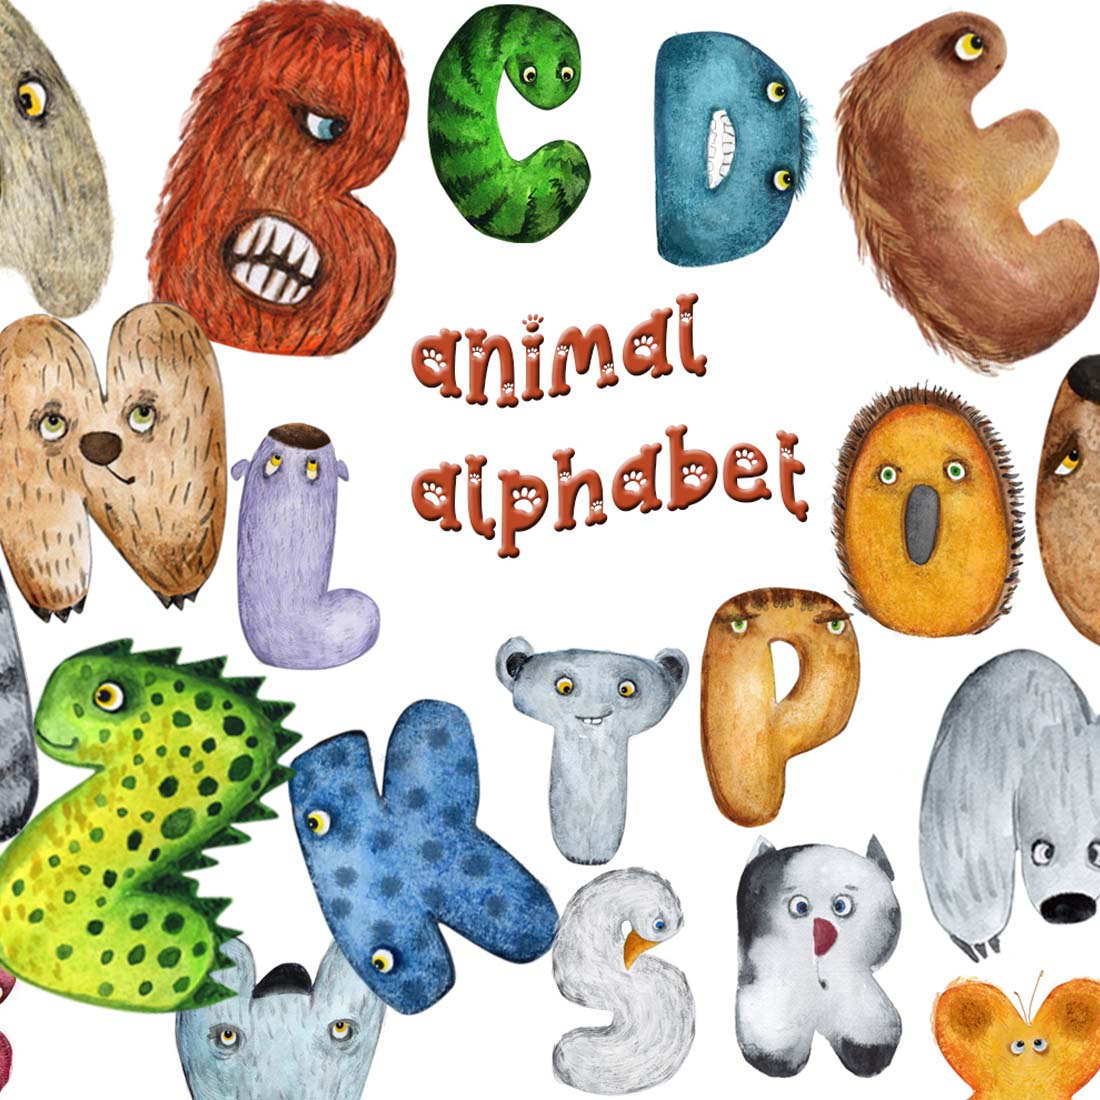 Animal Alphabet cover image.